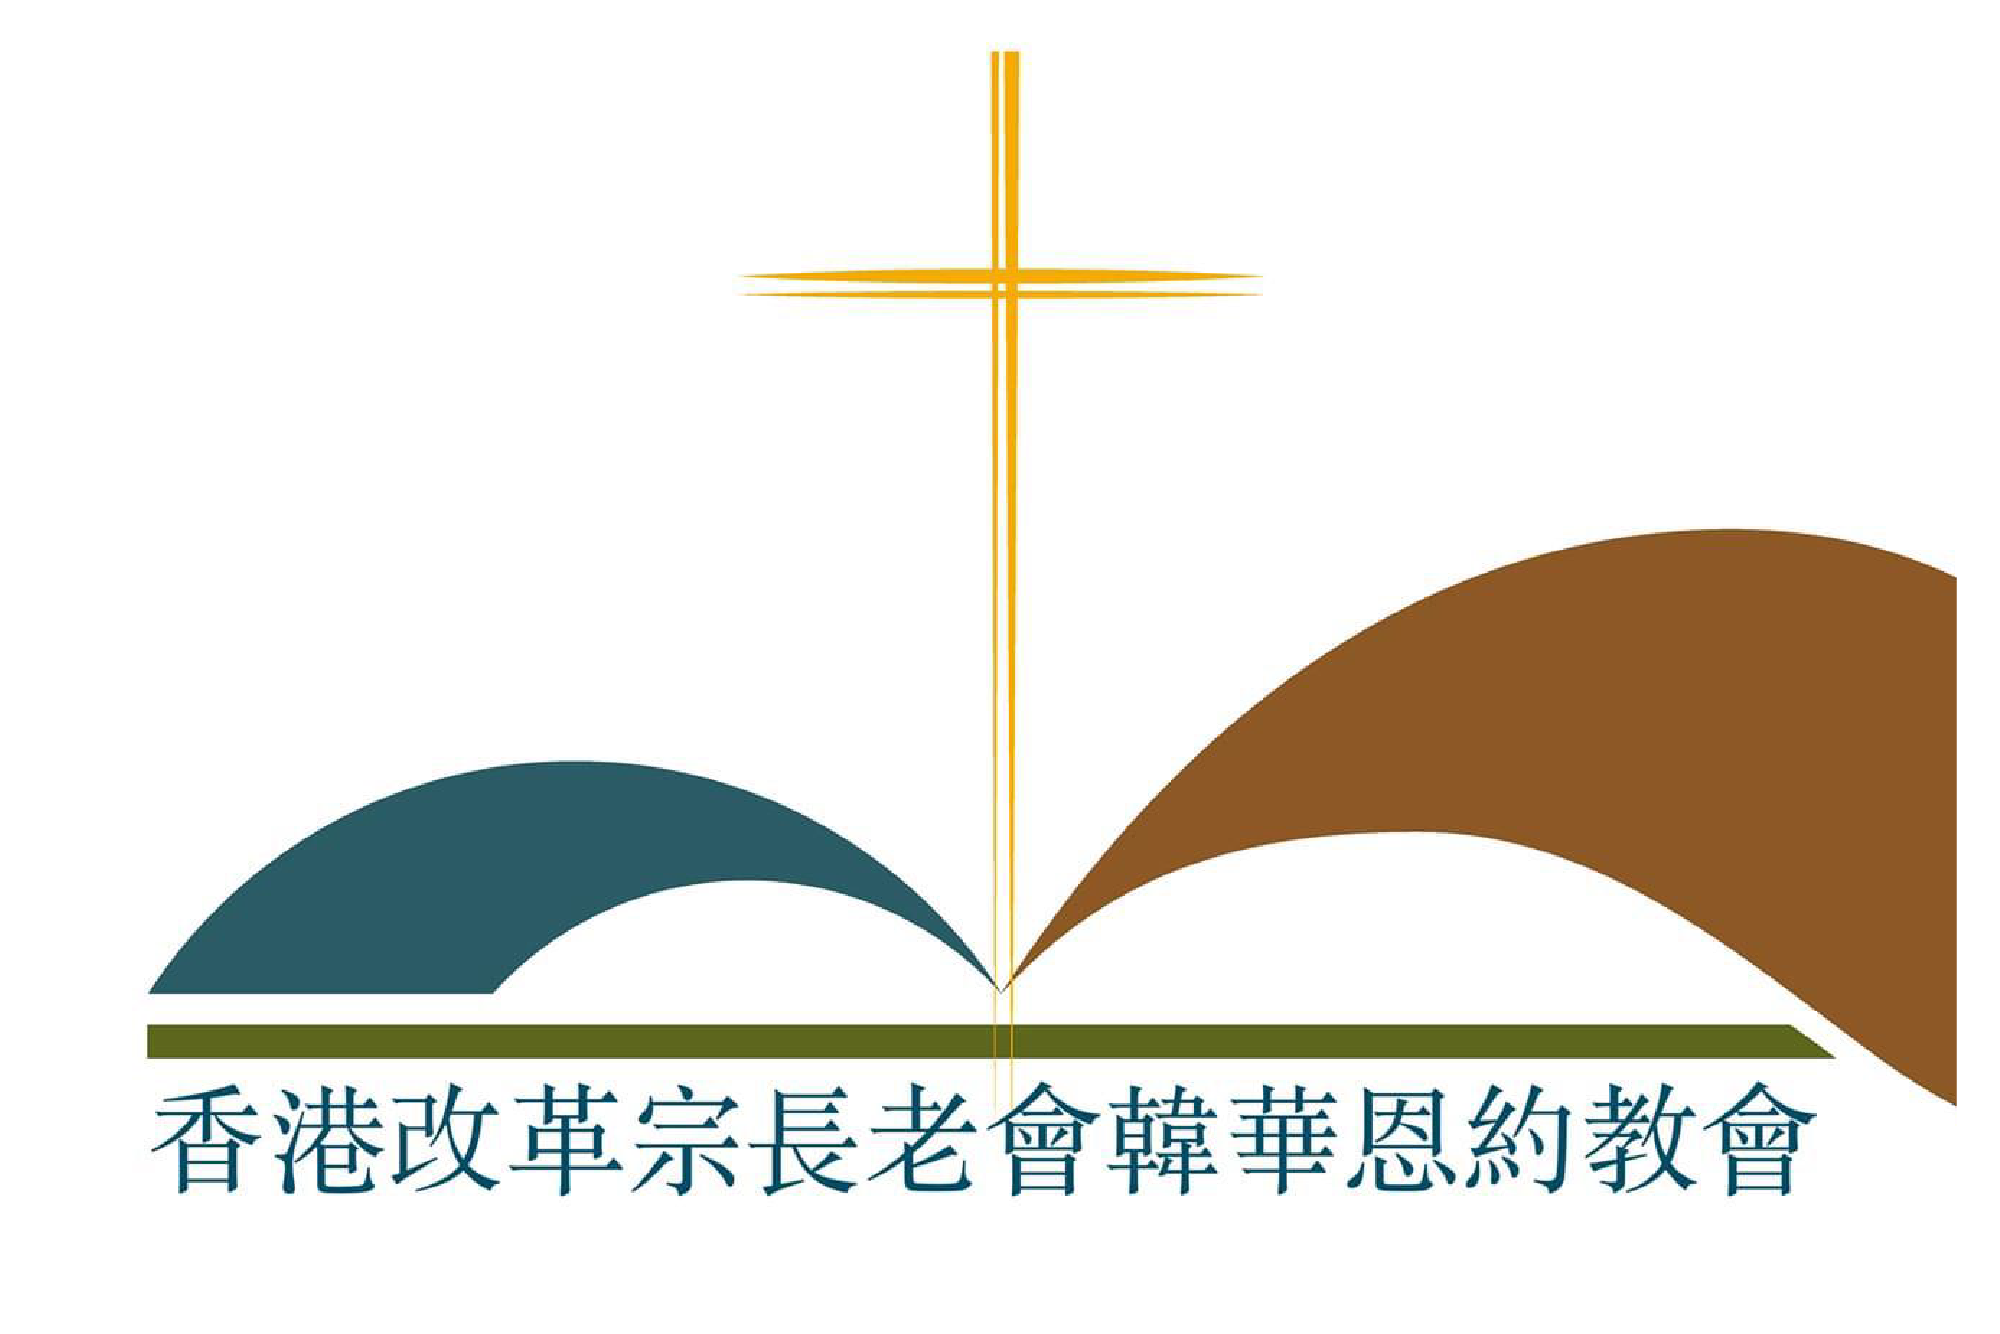 香港改革宗長老會韓華恩約教會有限公司 Hong Kong Reformed Presbyterian Hon Wah Covenant Church Limited